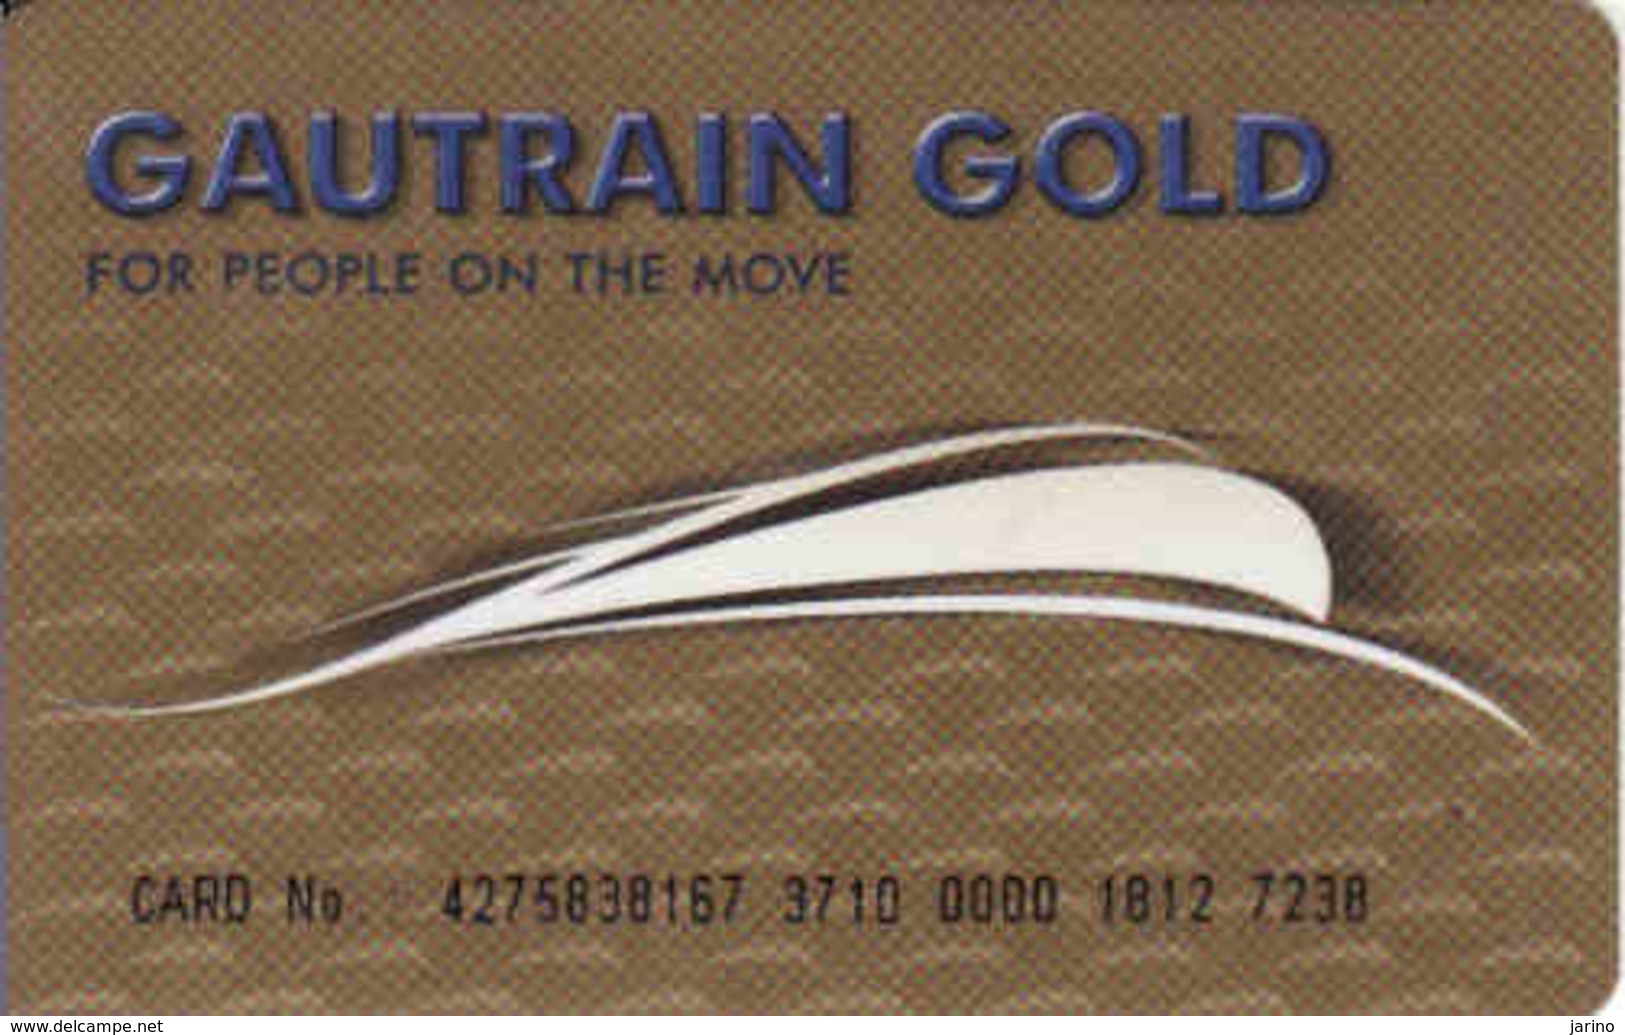 South Africa, Gautrain Gold Card, Transport Card In Pretoria For Train Bus, Metro, Parking - Moteurs